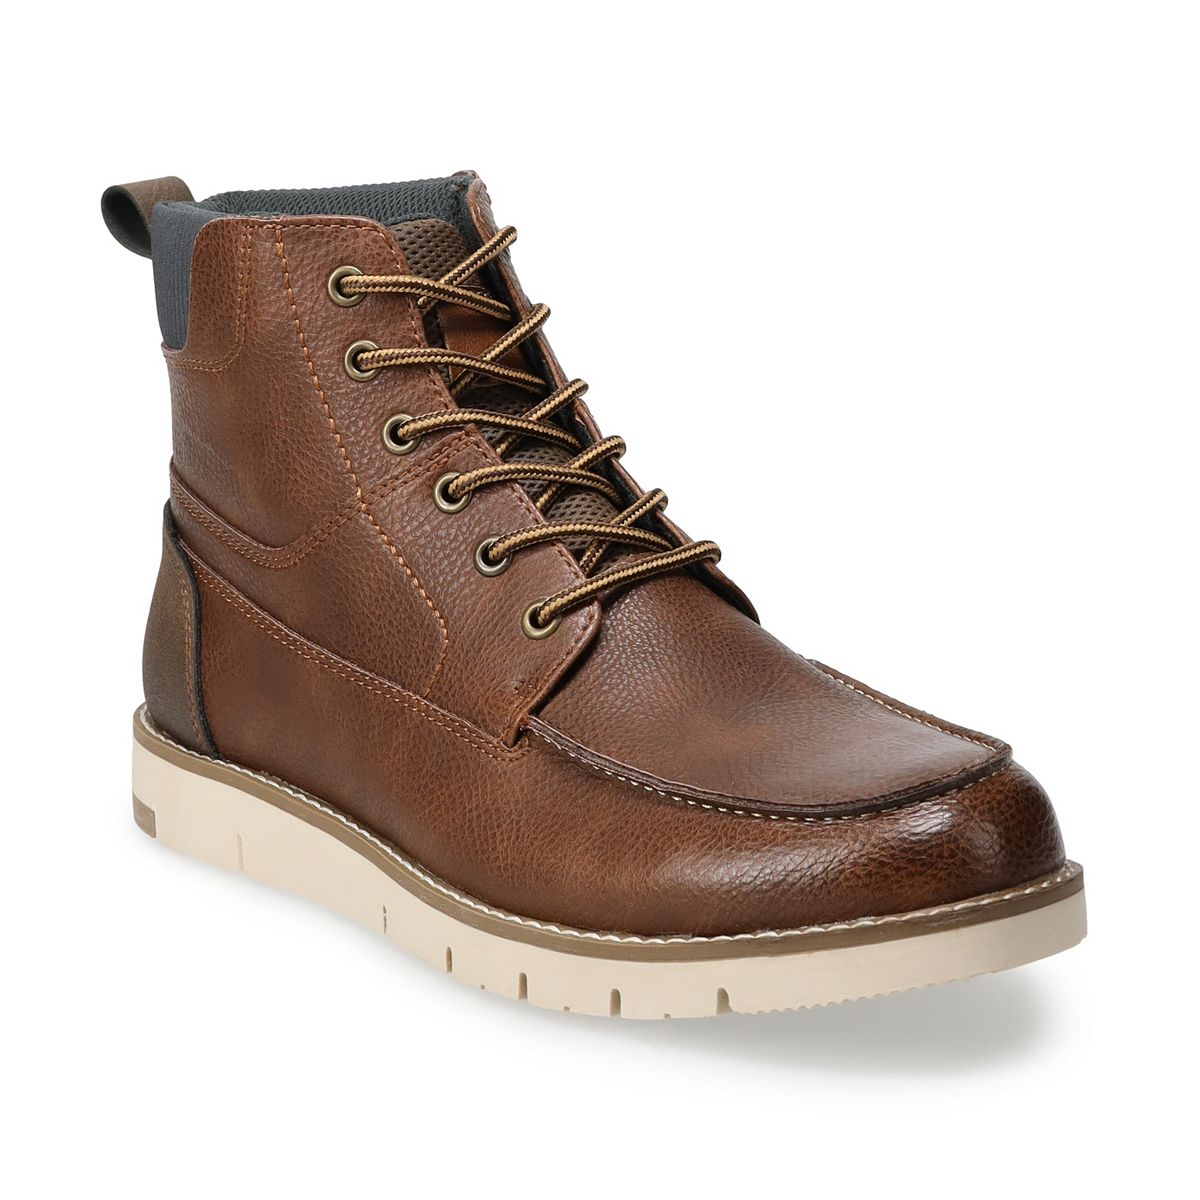 Men’s Sonoma Boots  $29.99